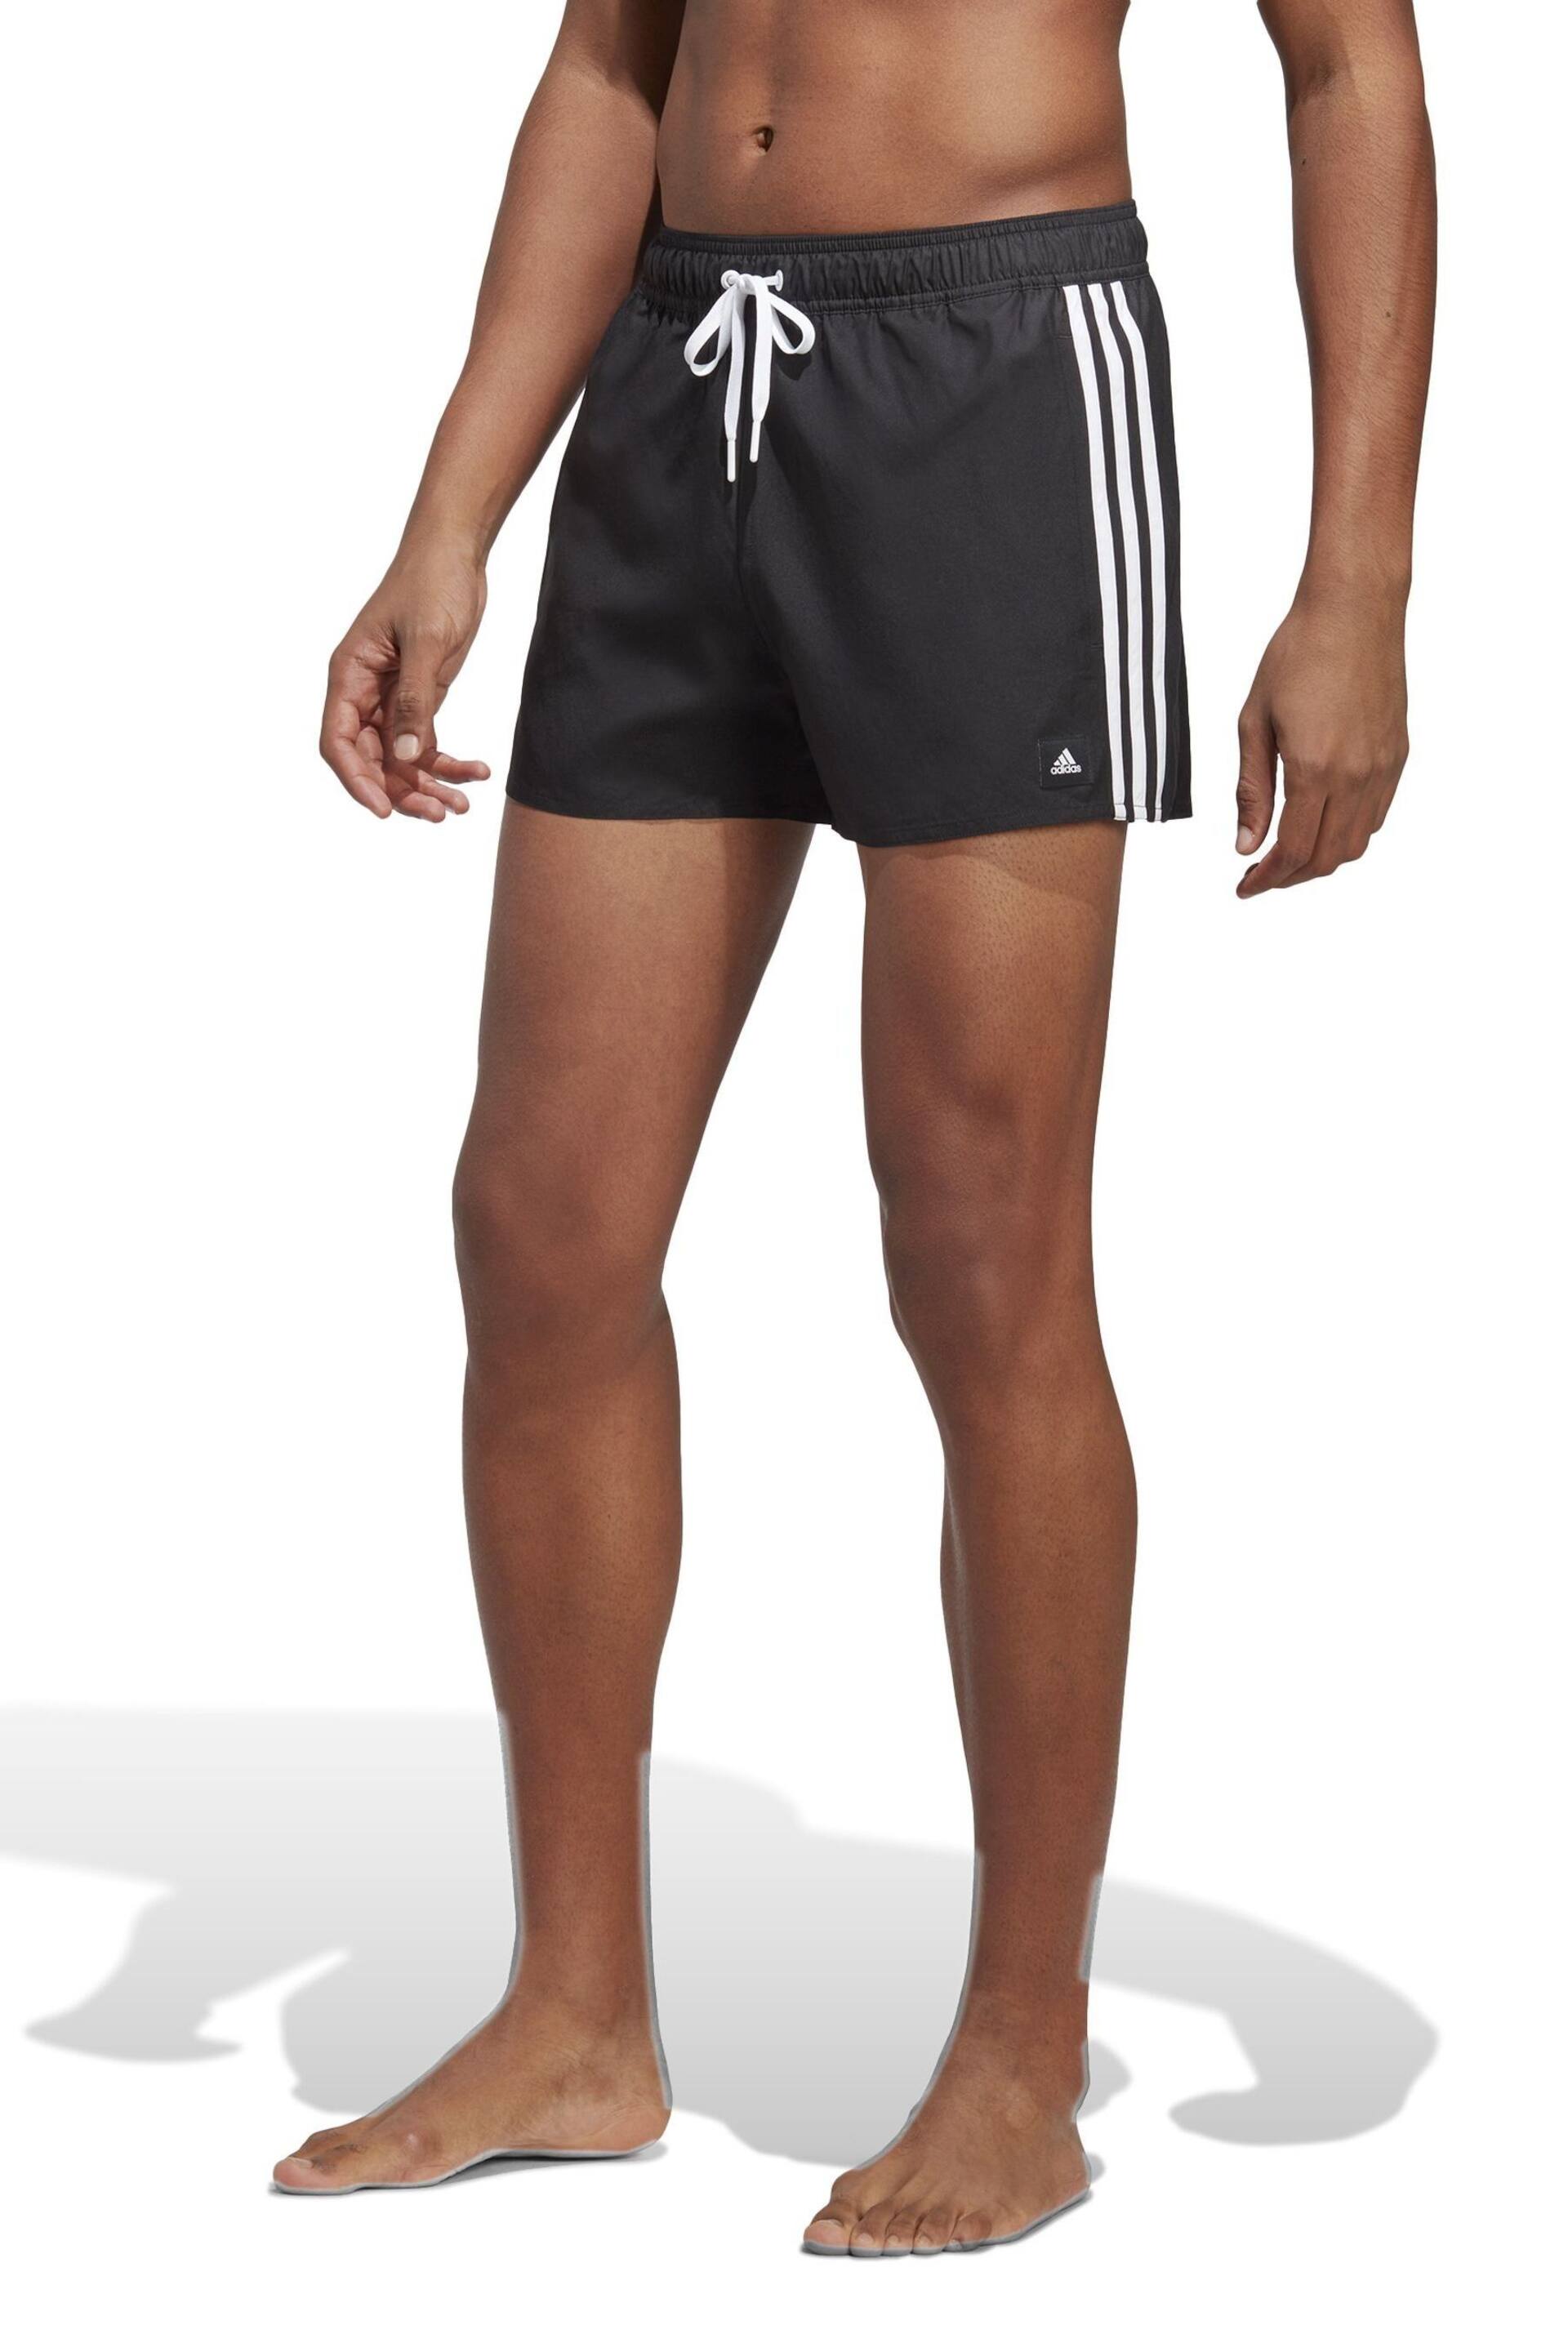 adidas Black Performance 3-Stripes Clx Very-Short-Length Swim Orange Shorts - Image 1 of 6